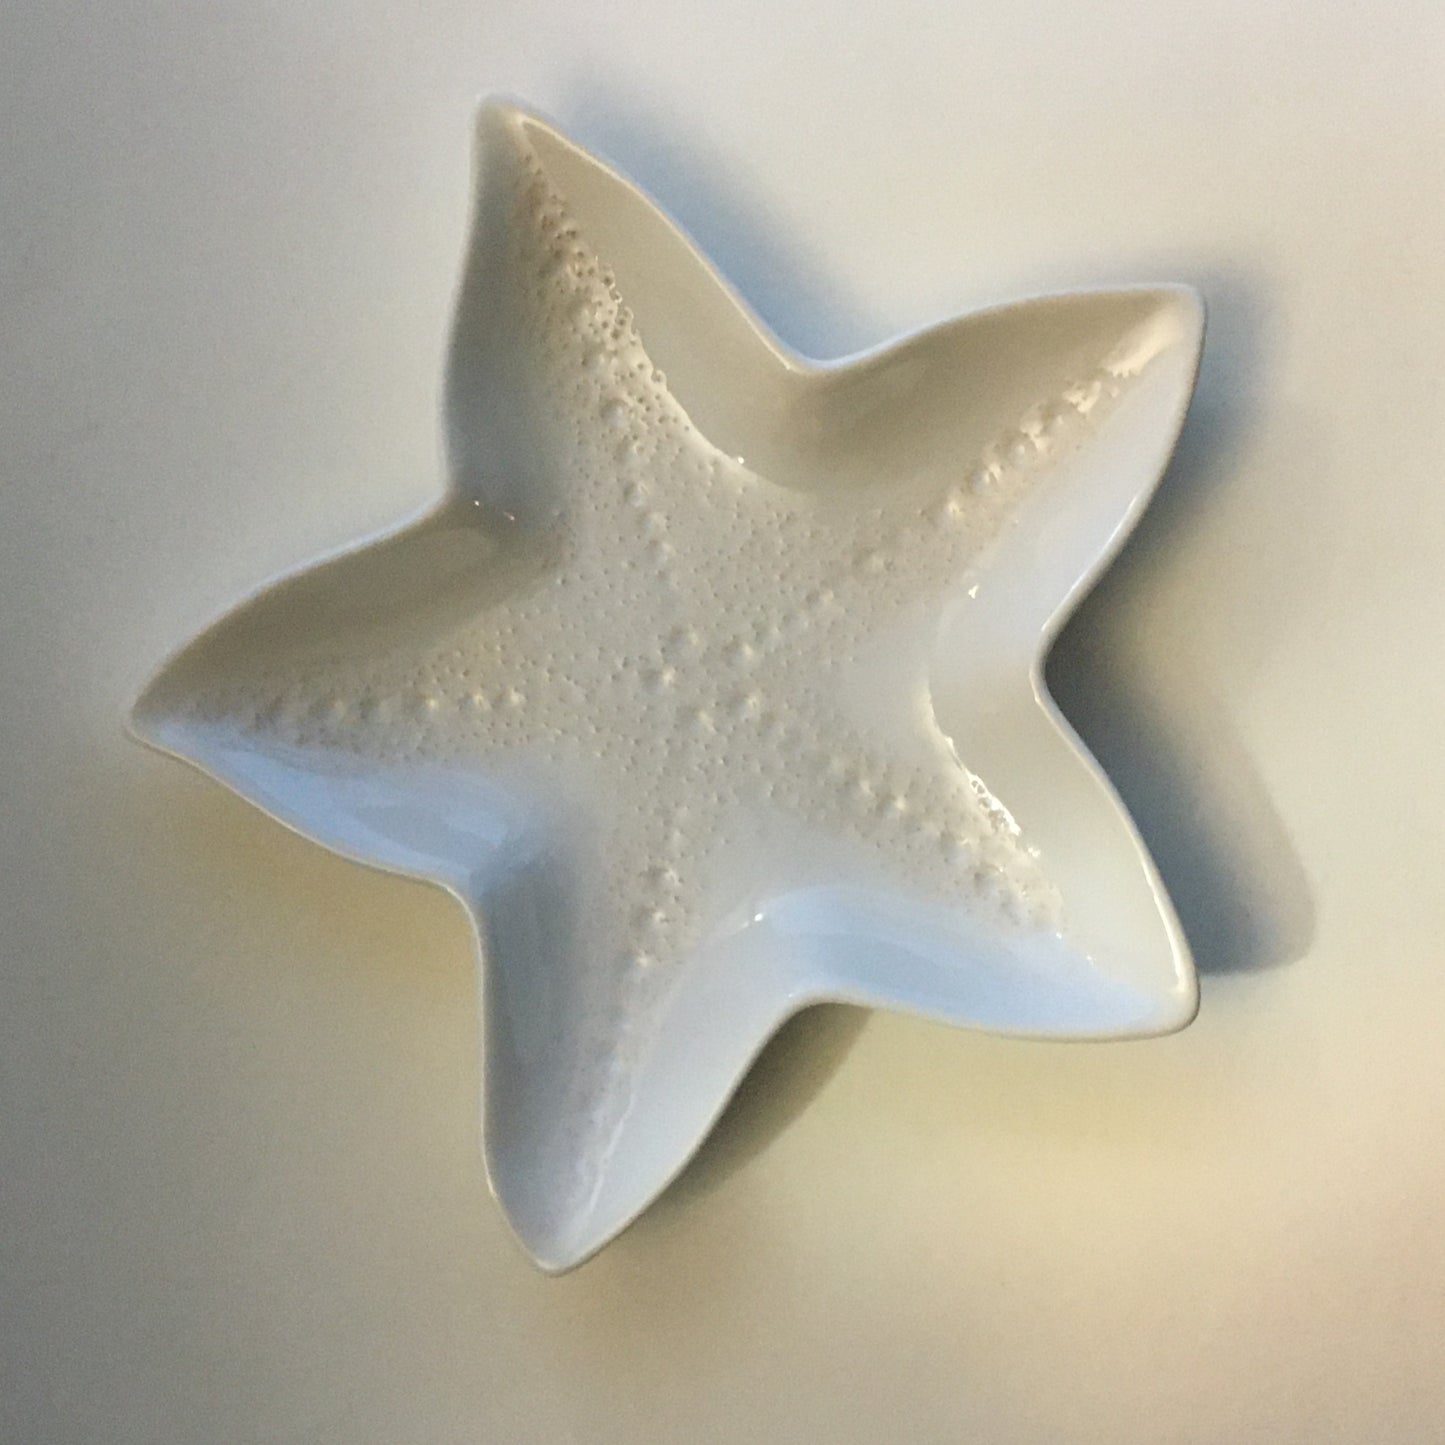 Starfish Plates - 3 Nesting Plates